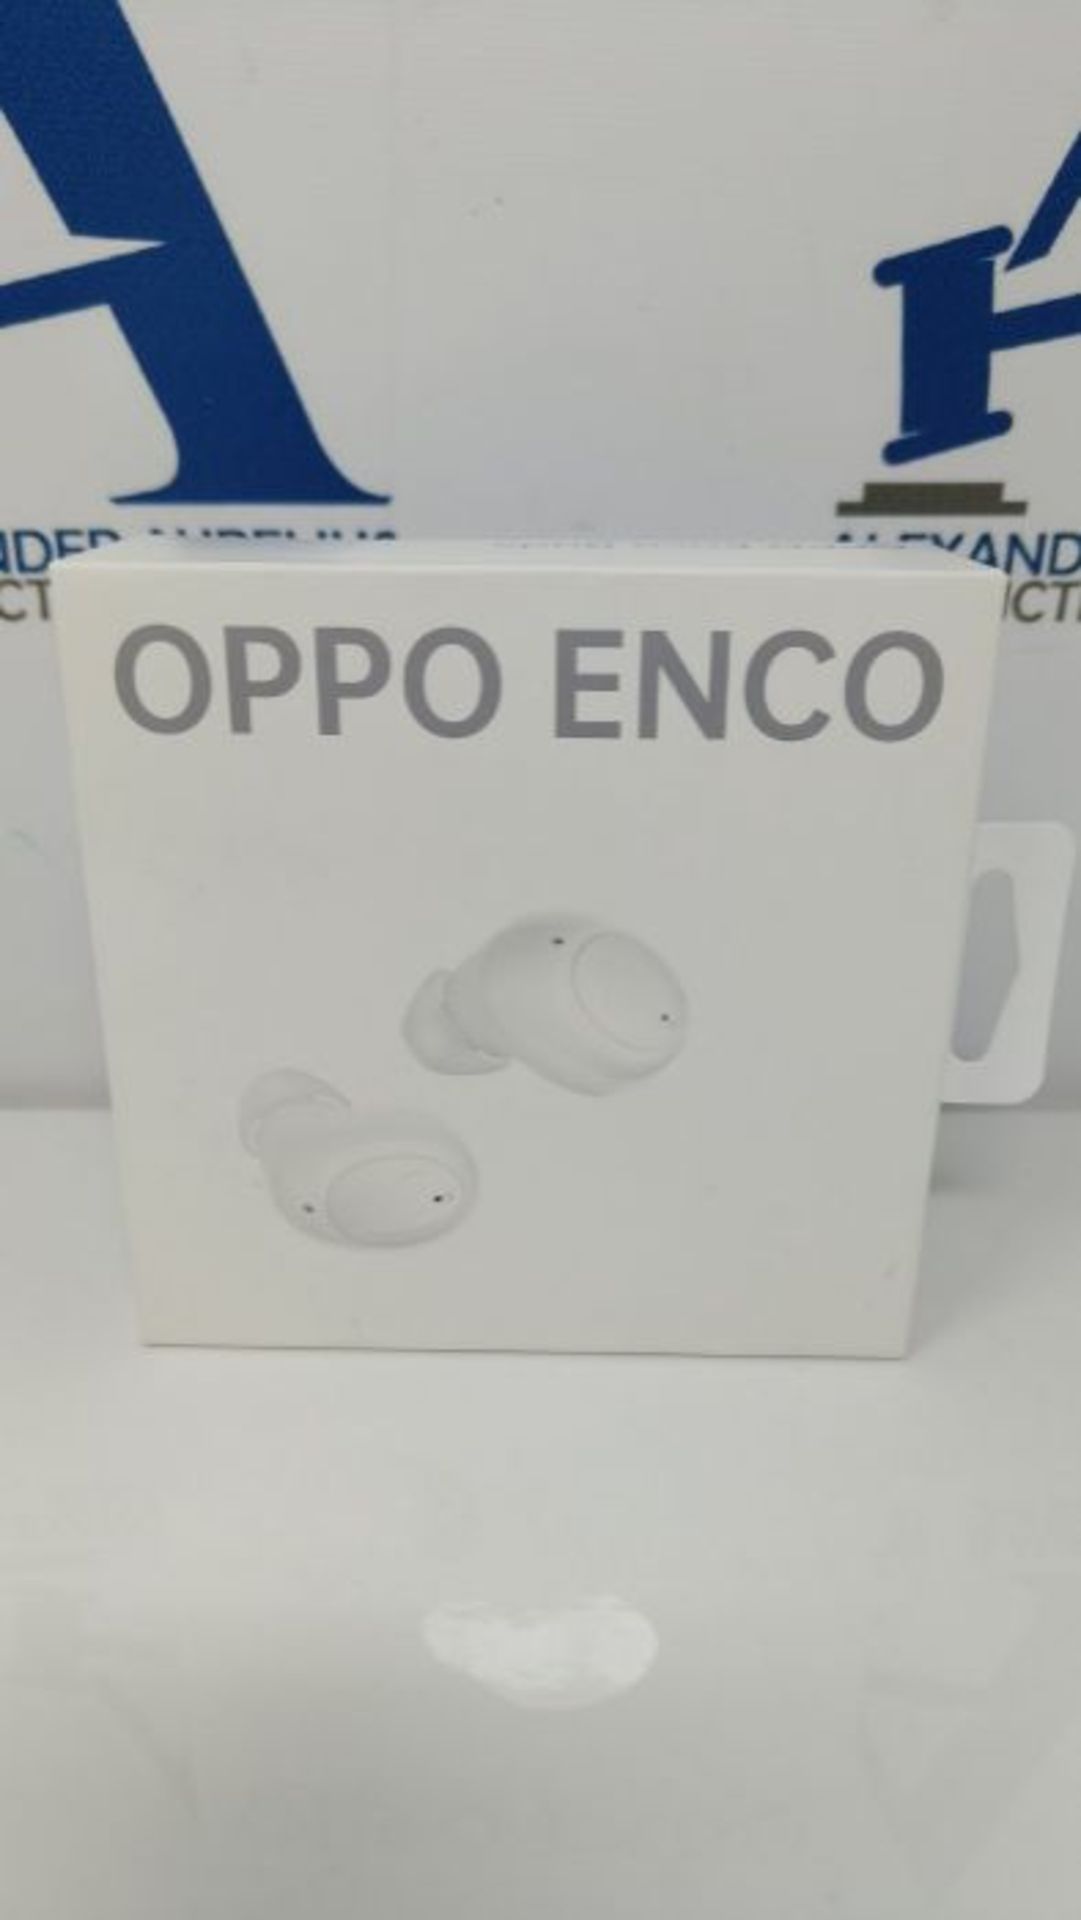 OPPO W12 Enco Buds (white) - Image 2 of 3